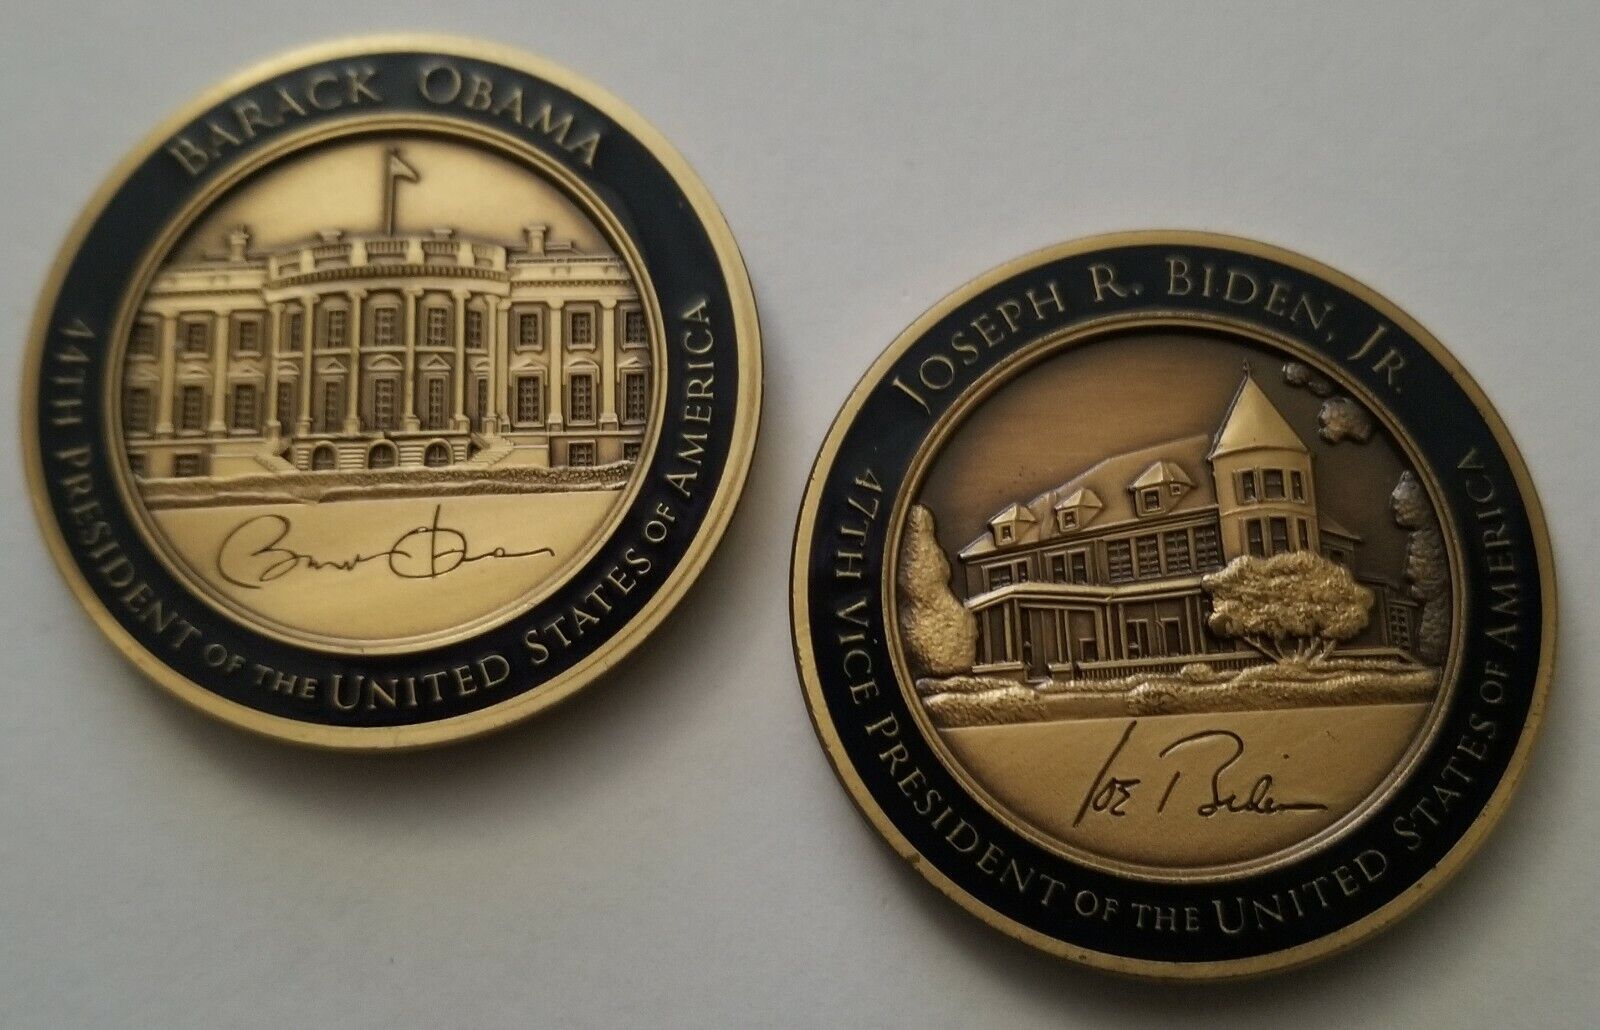 Lot of 2: Official POTUS Barack Obama VPOTUS Joe Biden White House Issued Coins 